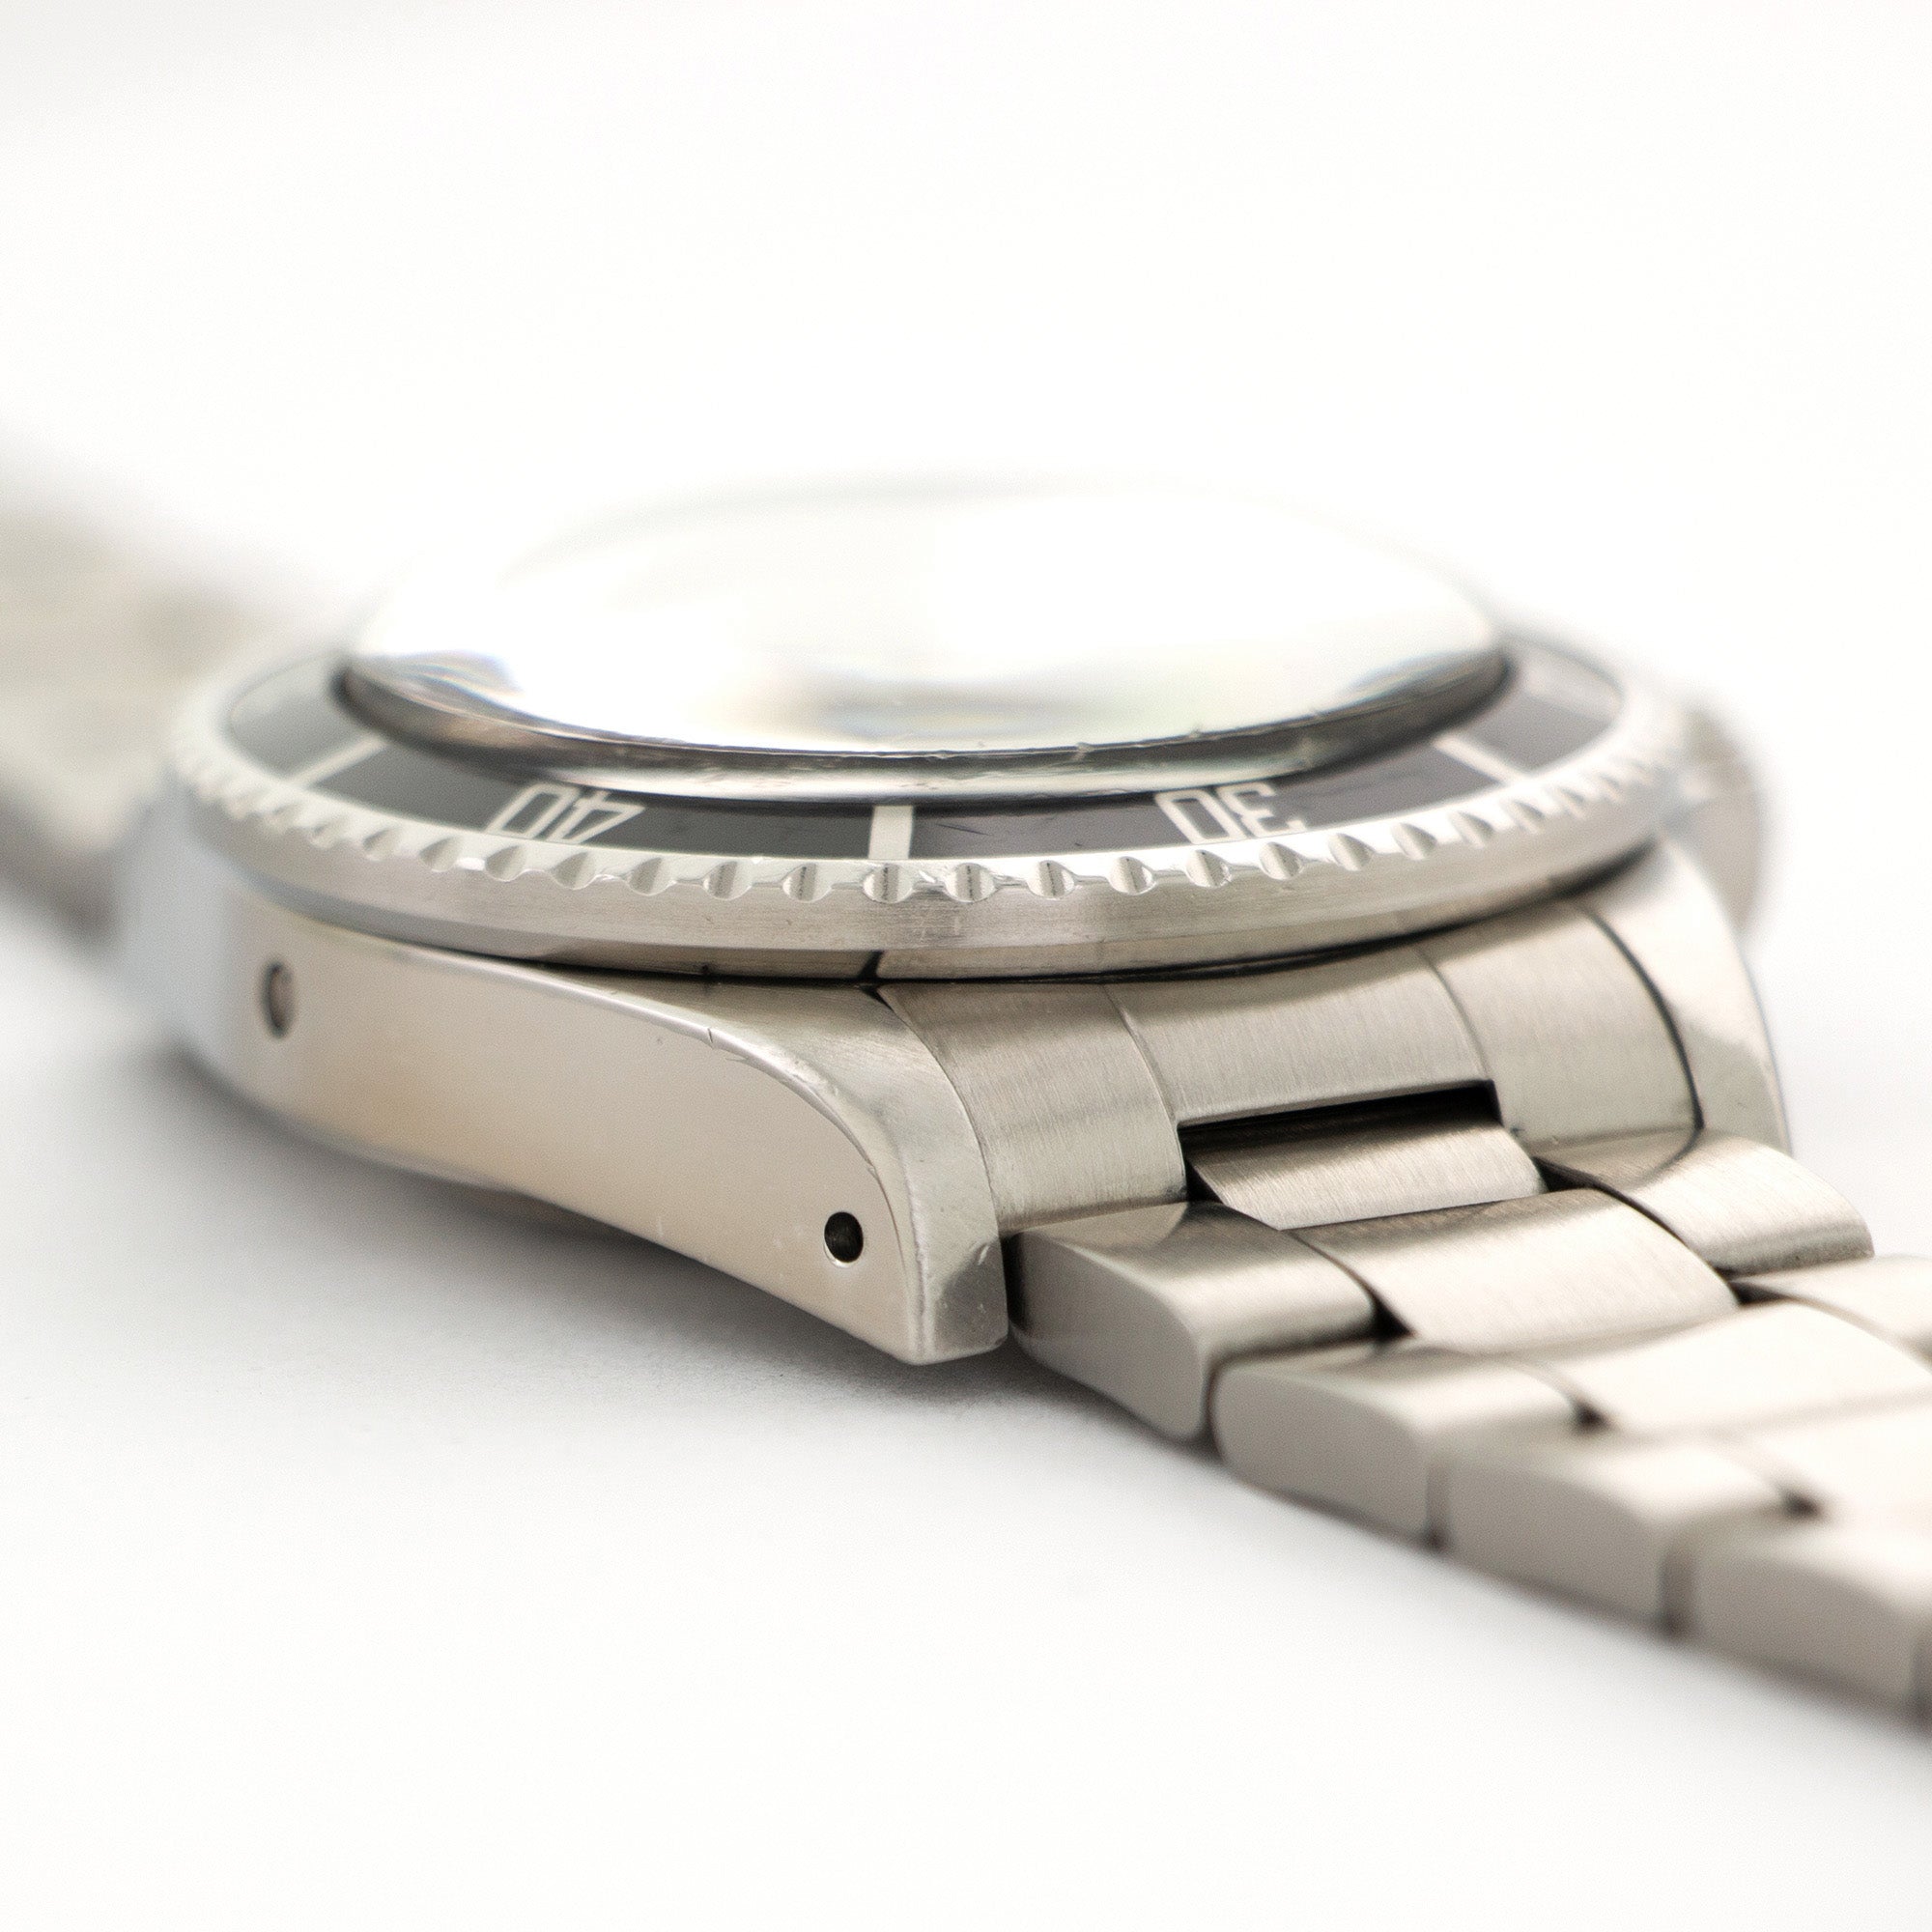 Rolex - Rolex Sea-Dweller Rail Dial Watch Ref. 1665, from 1979 - The Keystone Watches